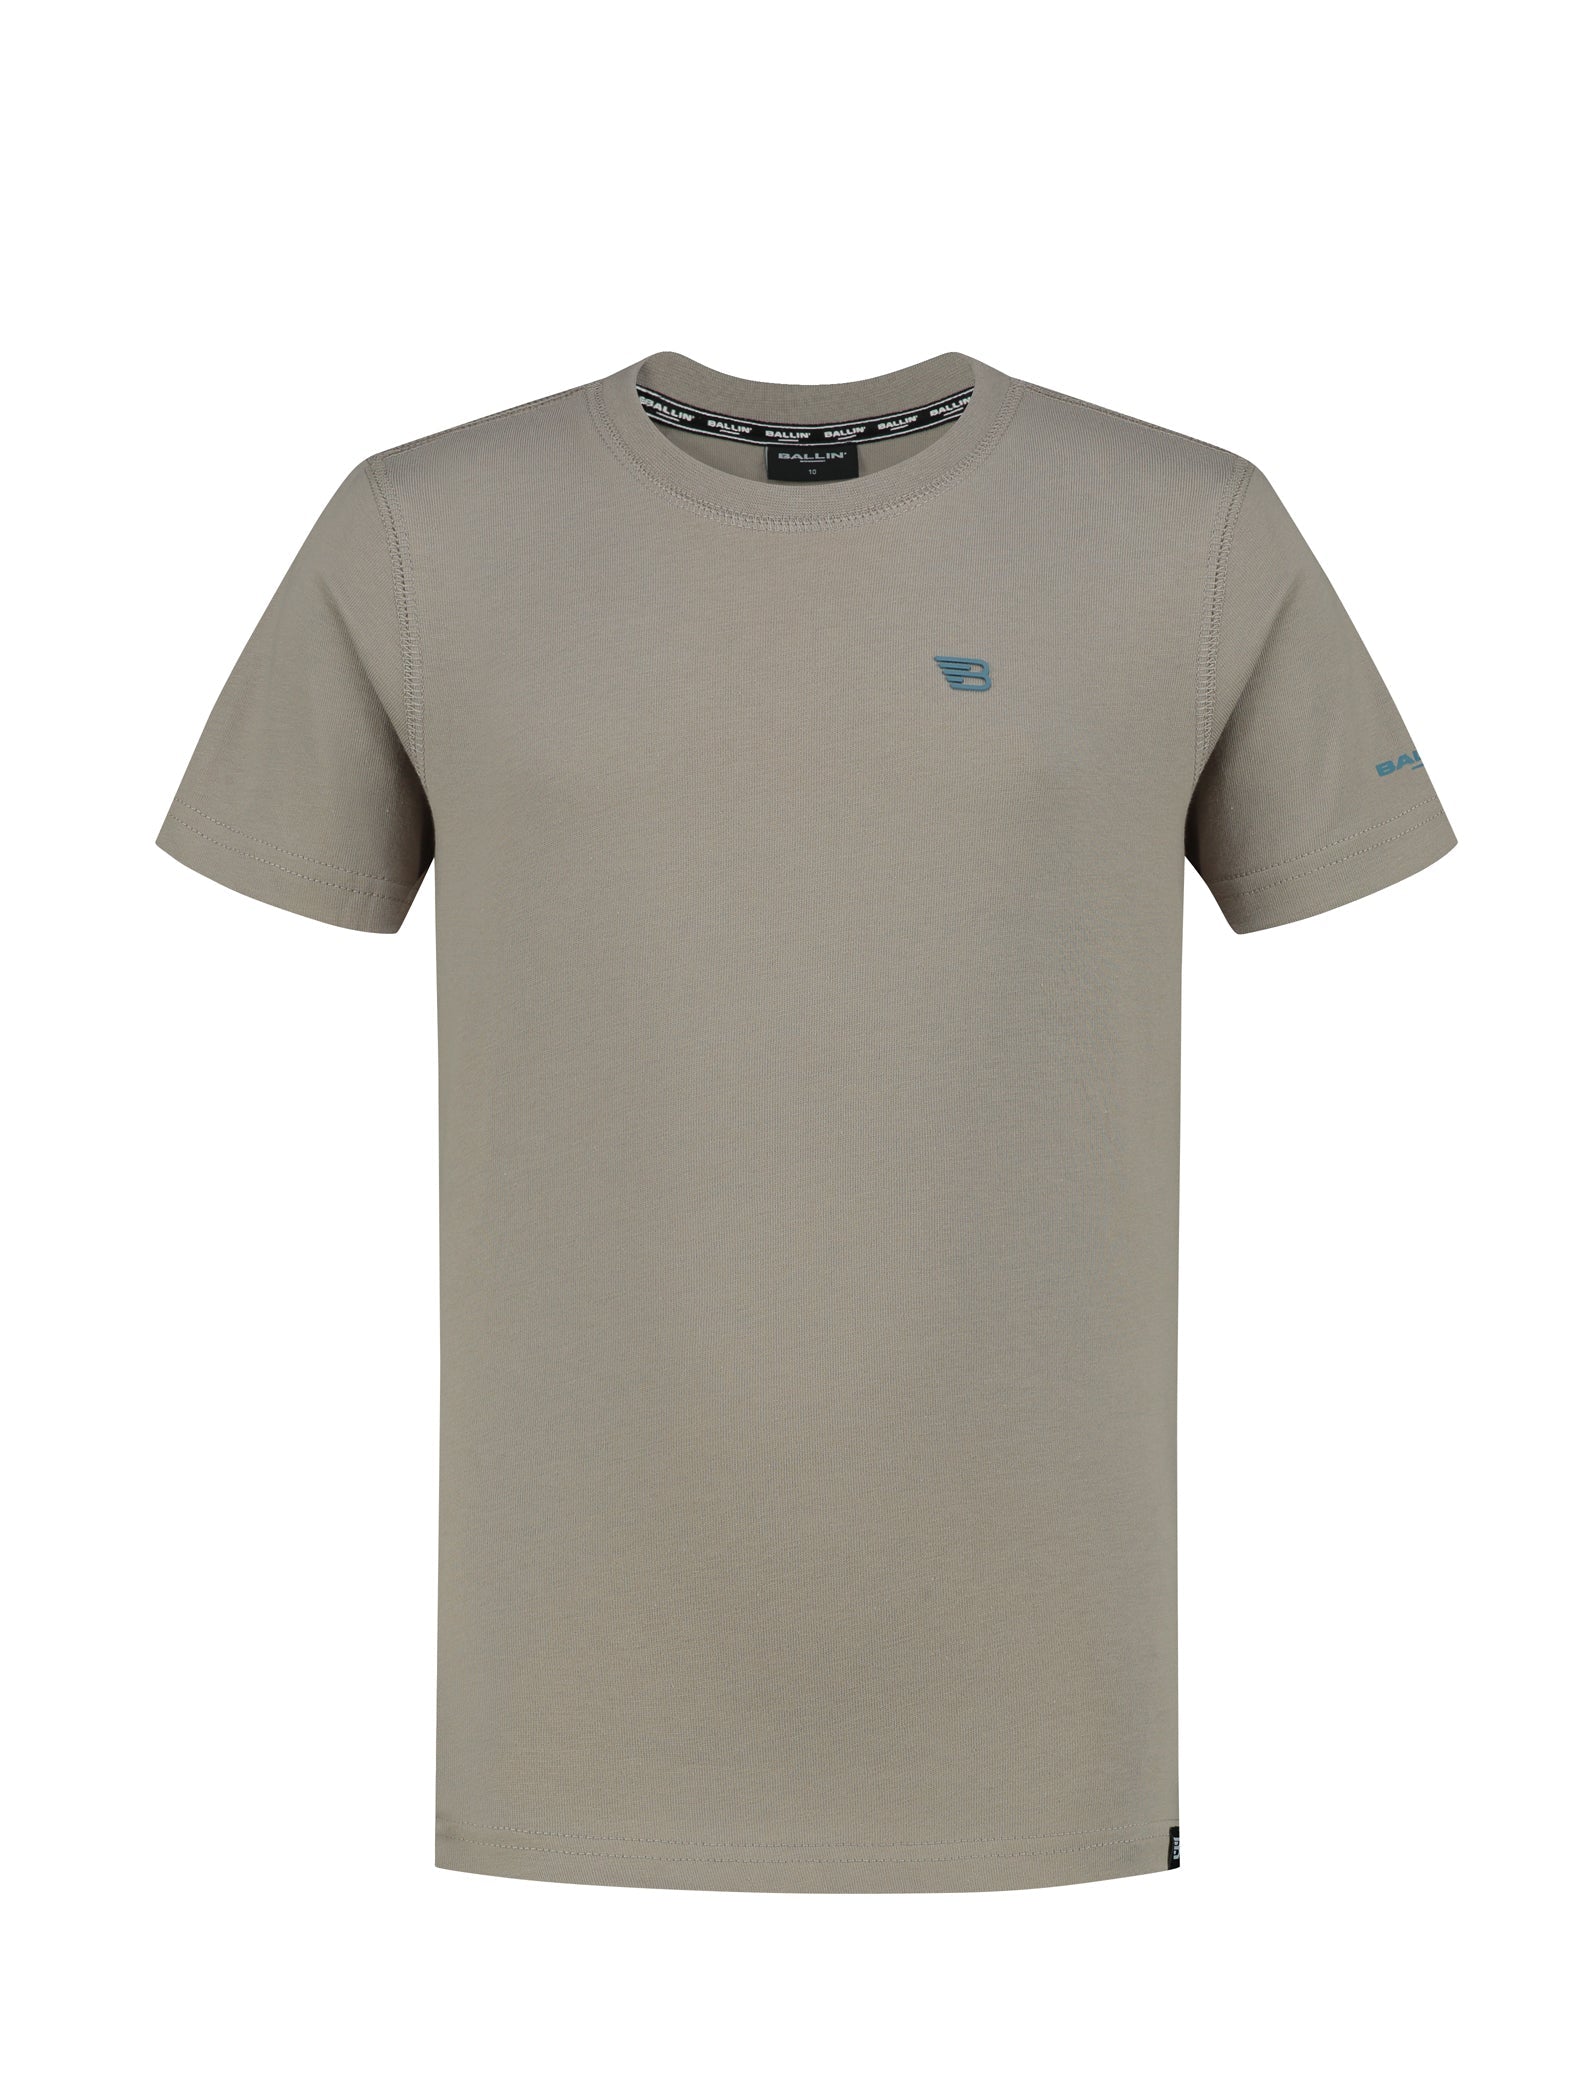 Unisexs T-shirt with chest print van Ballin Amsterdam in de kleur Taupe in maat 176.